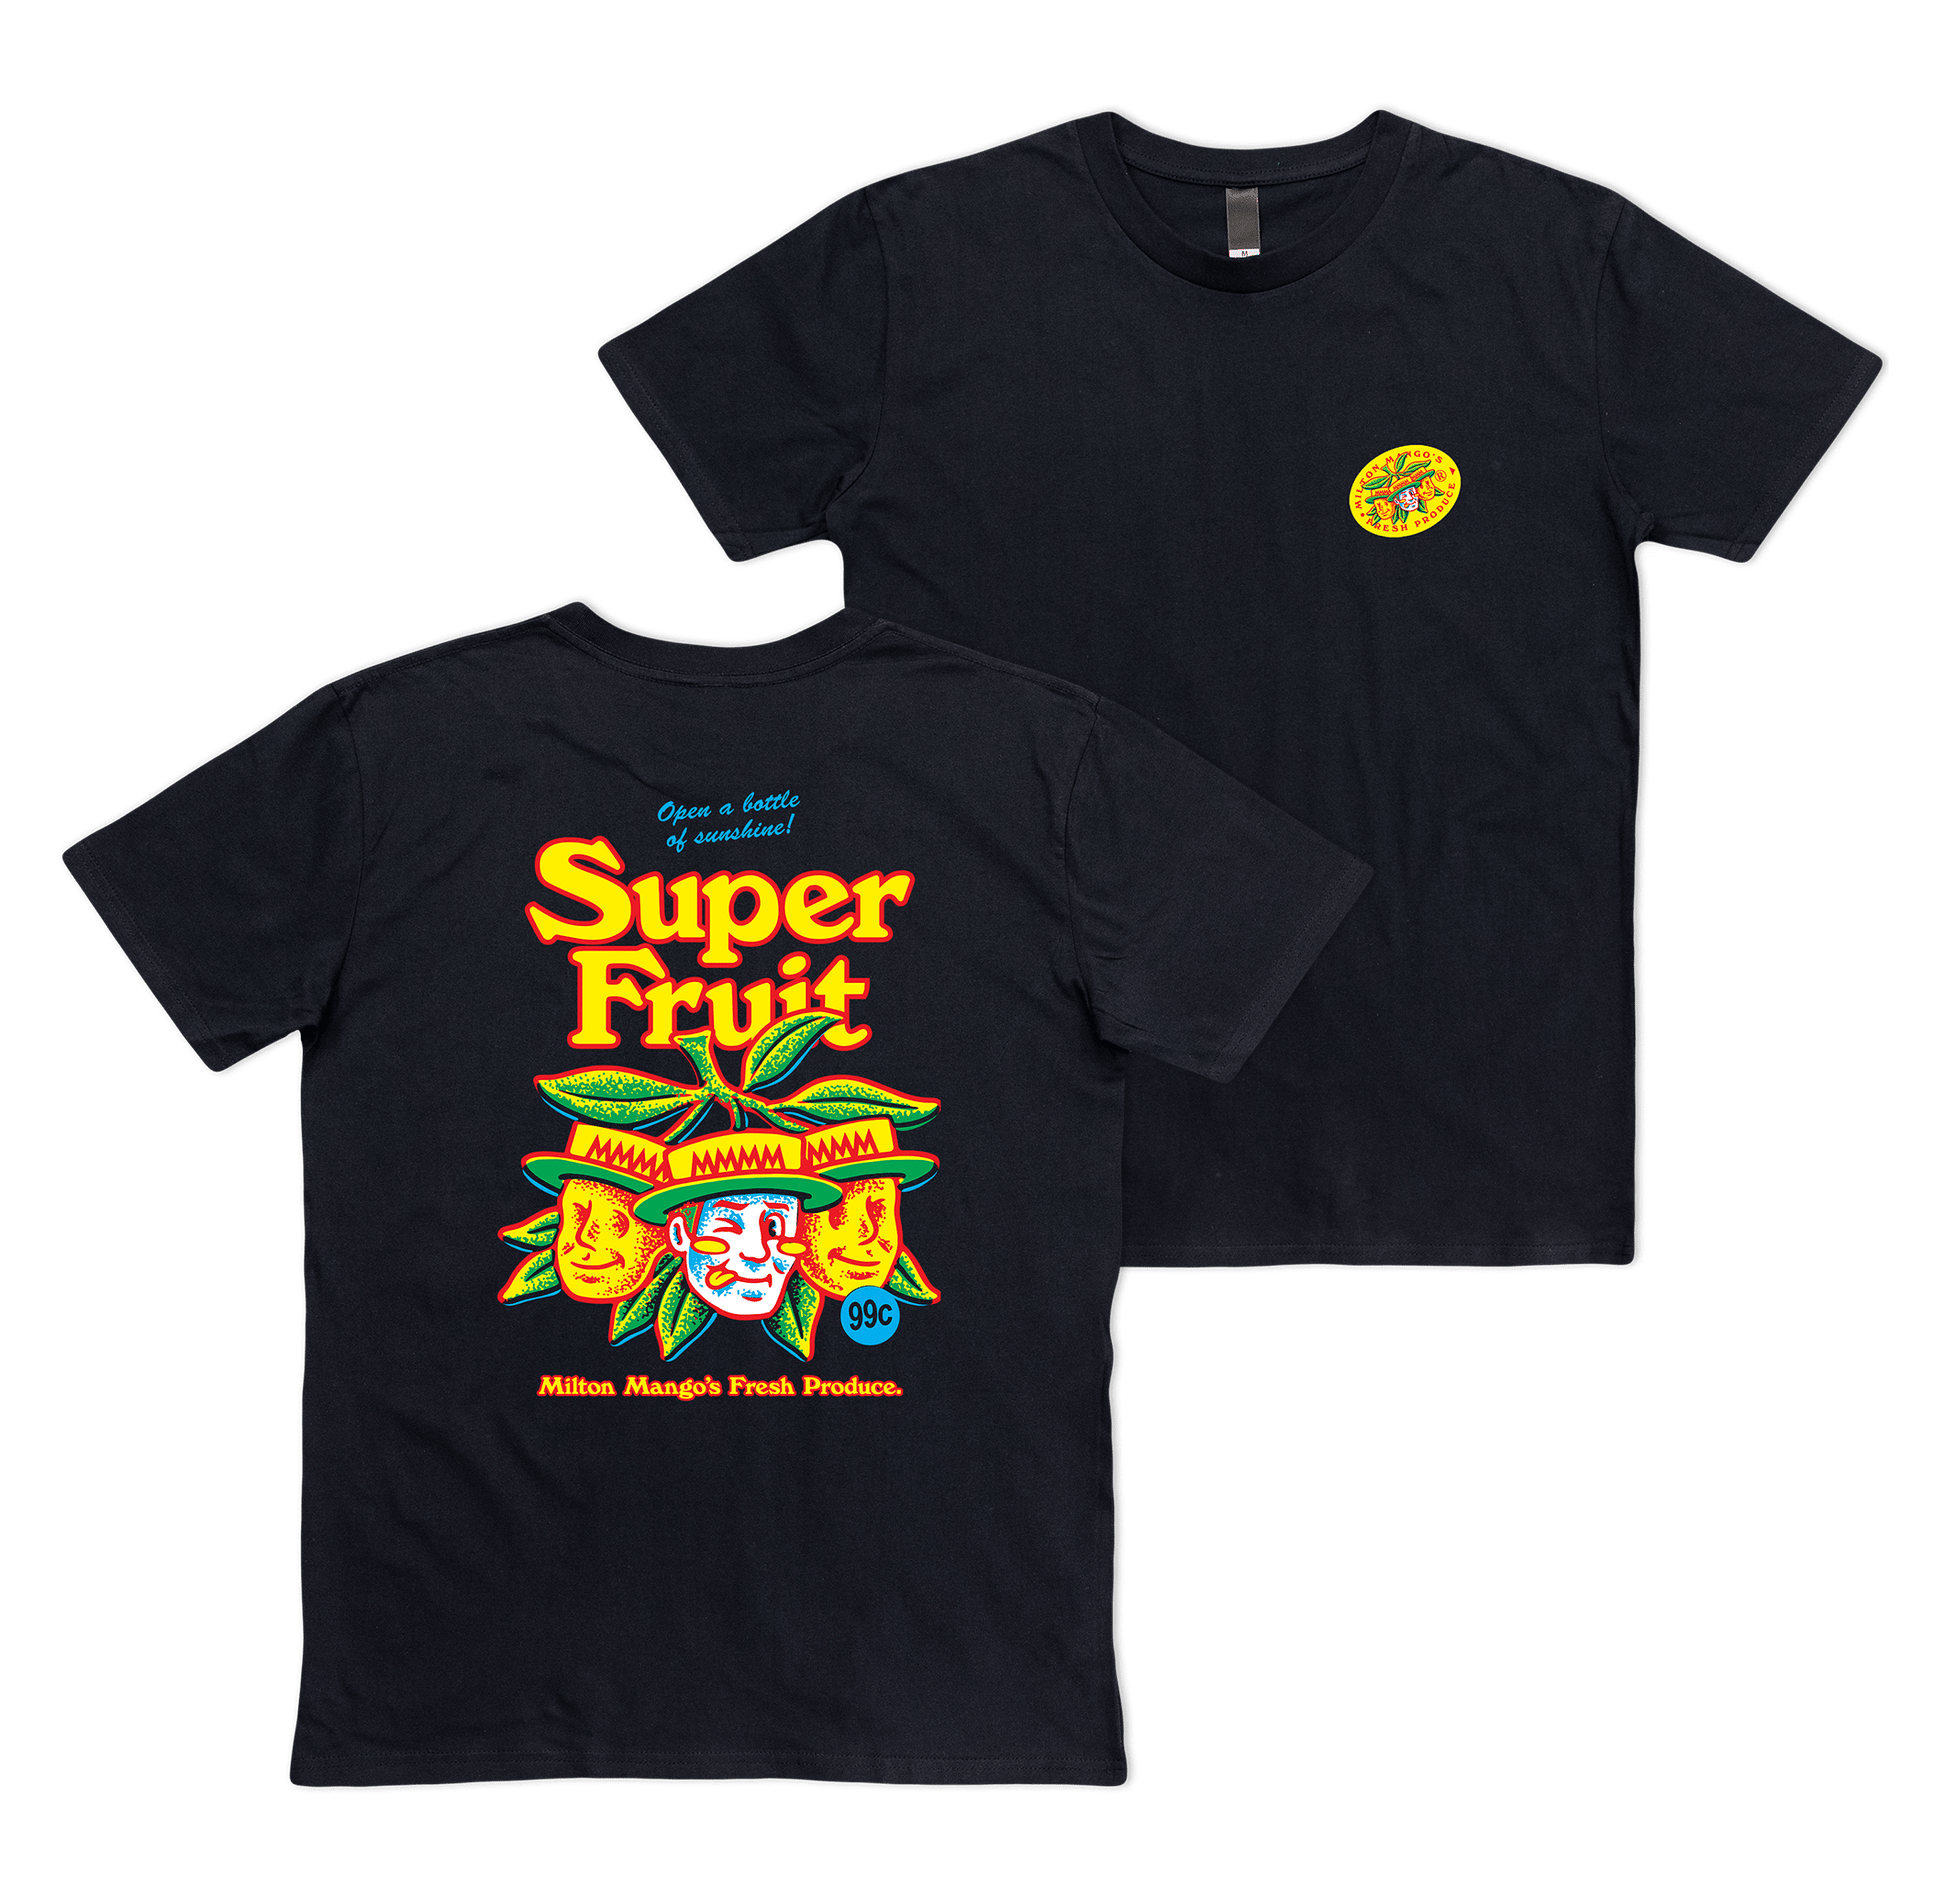 Super Fruit Tee Black T-Shirts Milton Mango